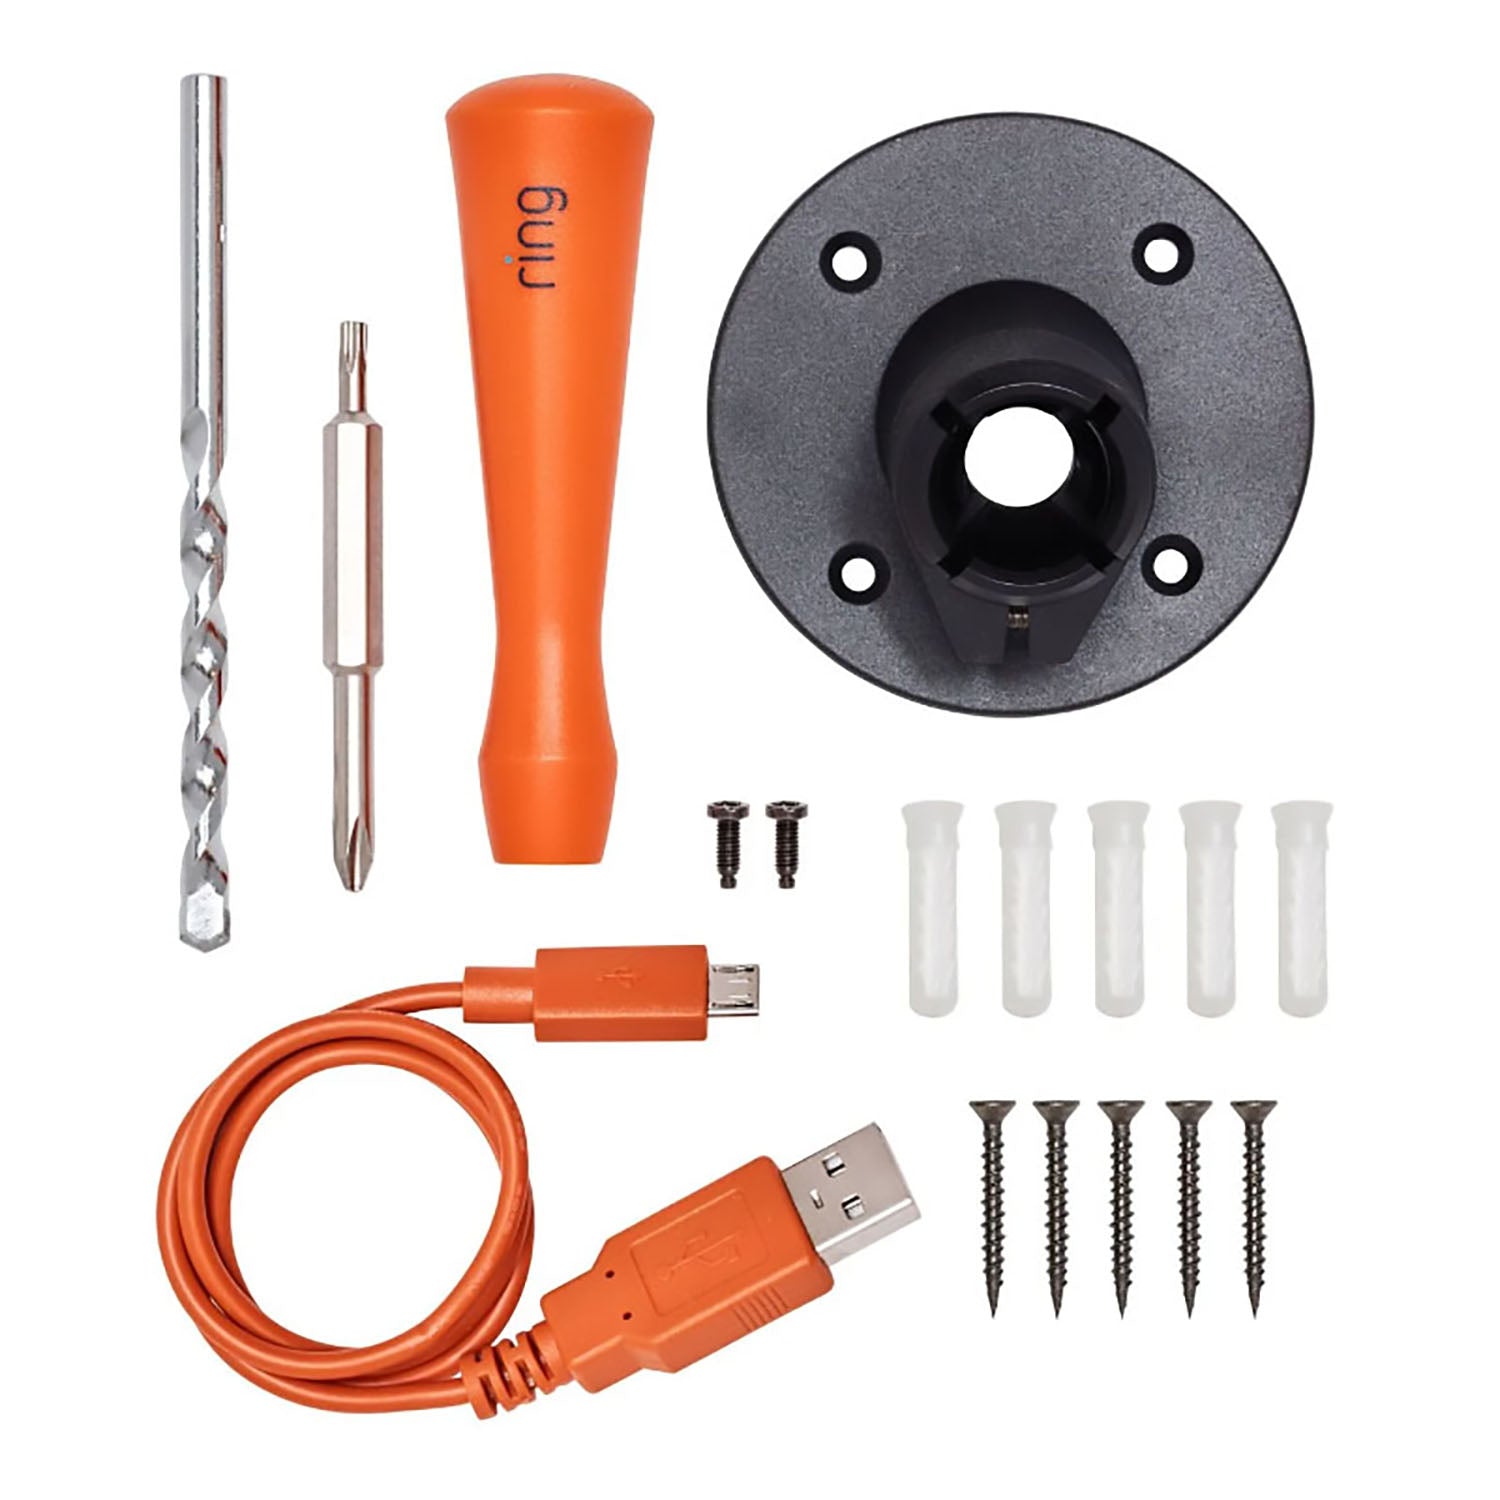 Ring Spare Parts Kit for Spotlight Security Camera - Black - Pro-Distributing